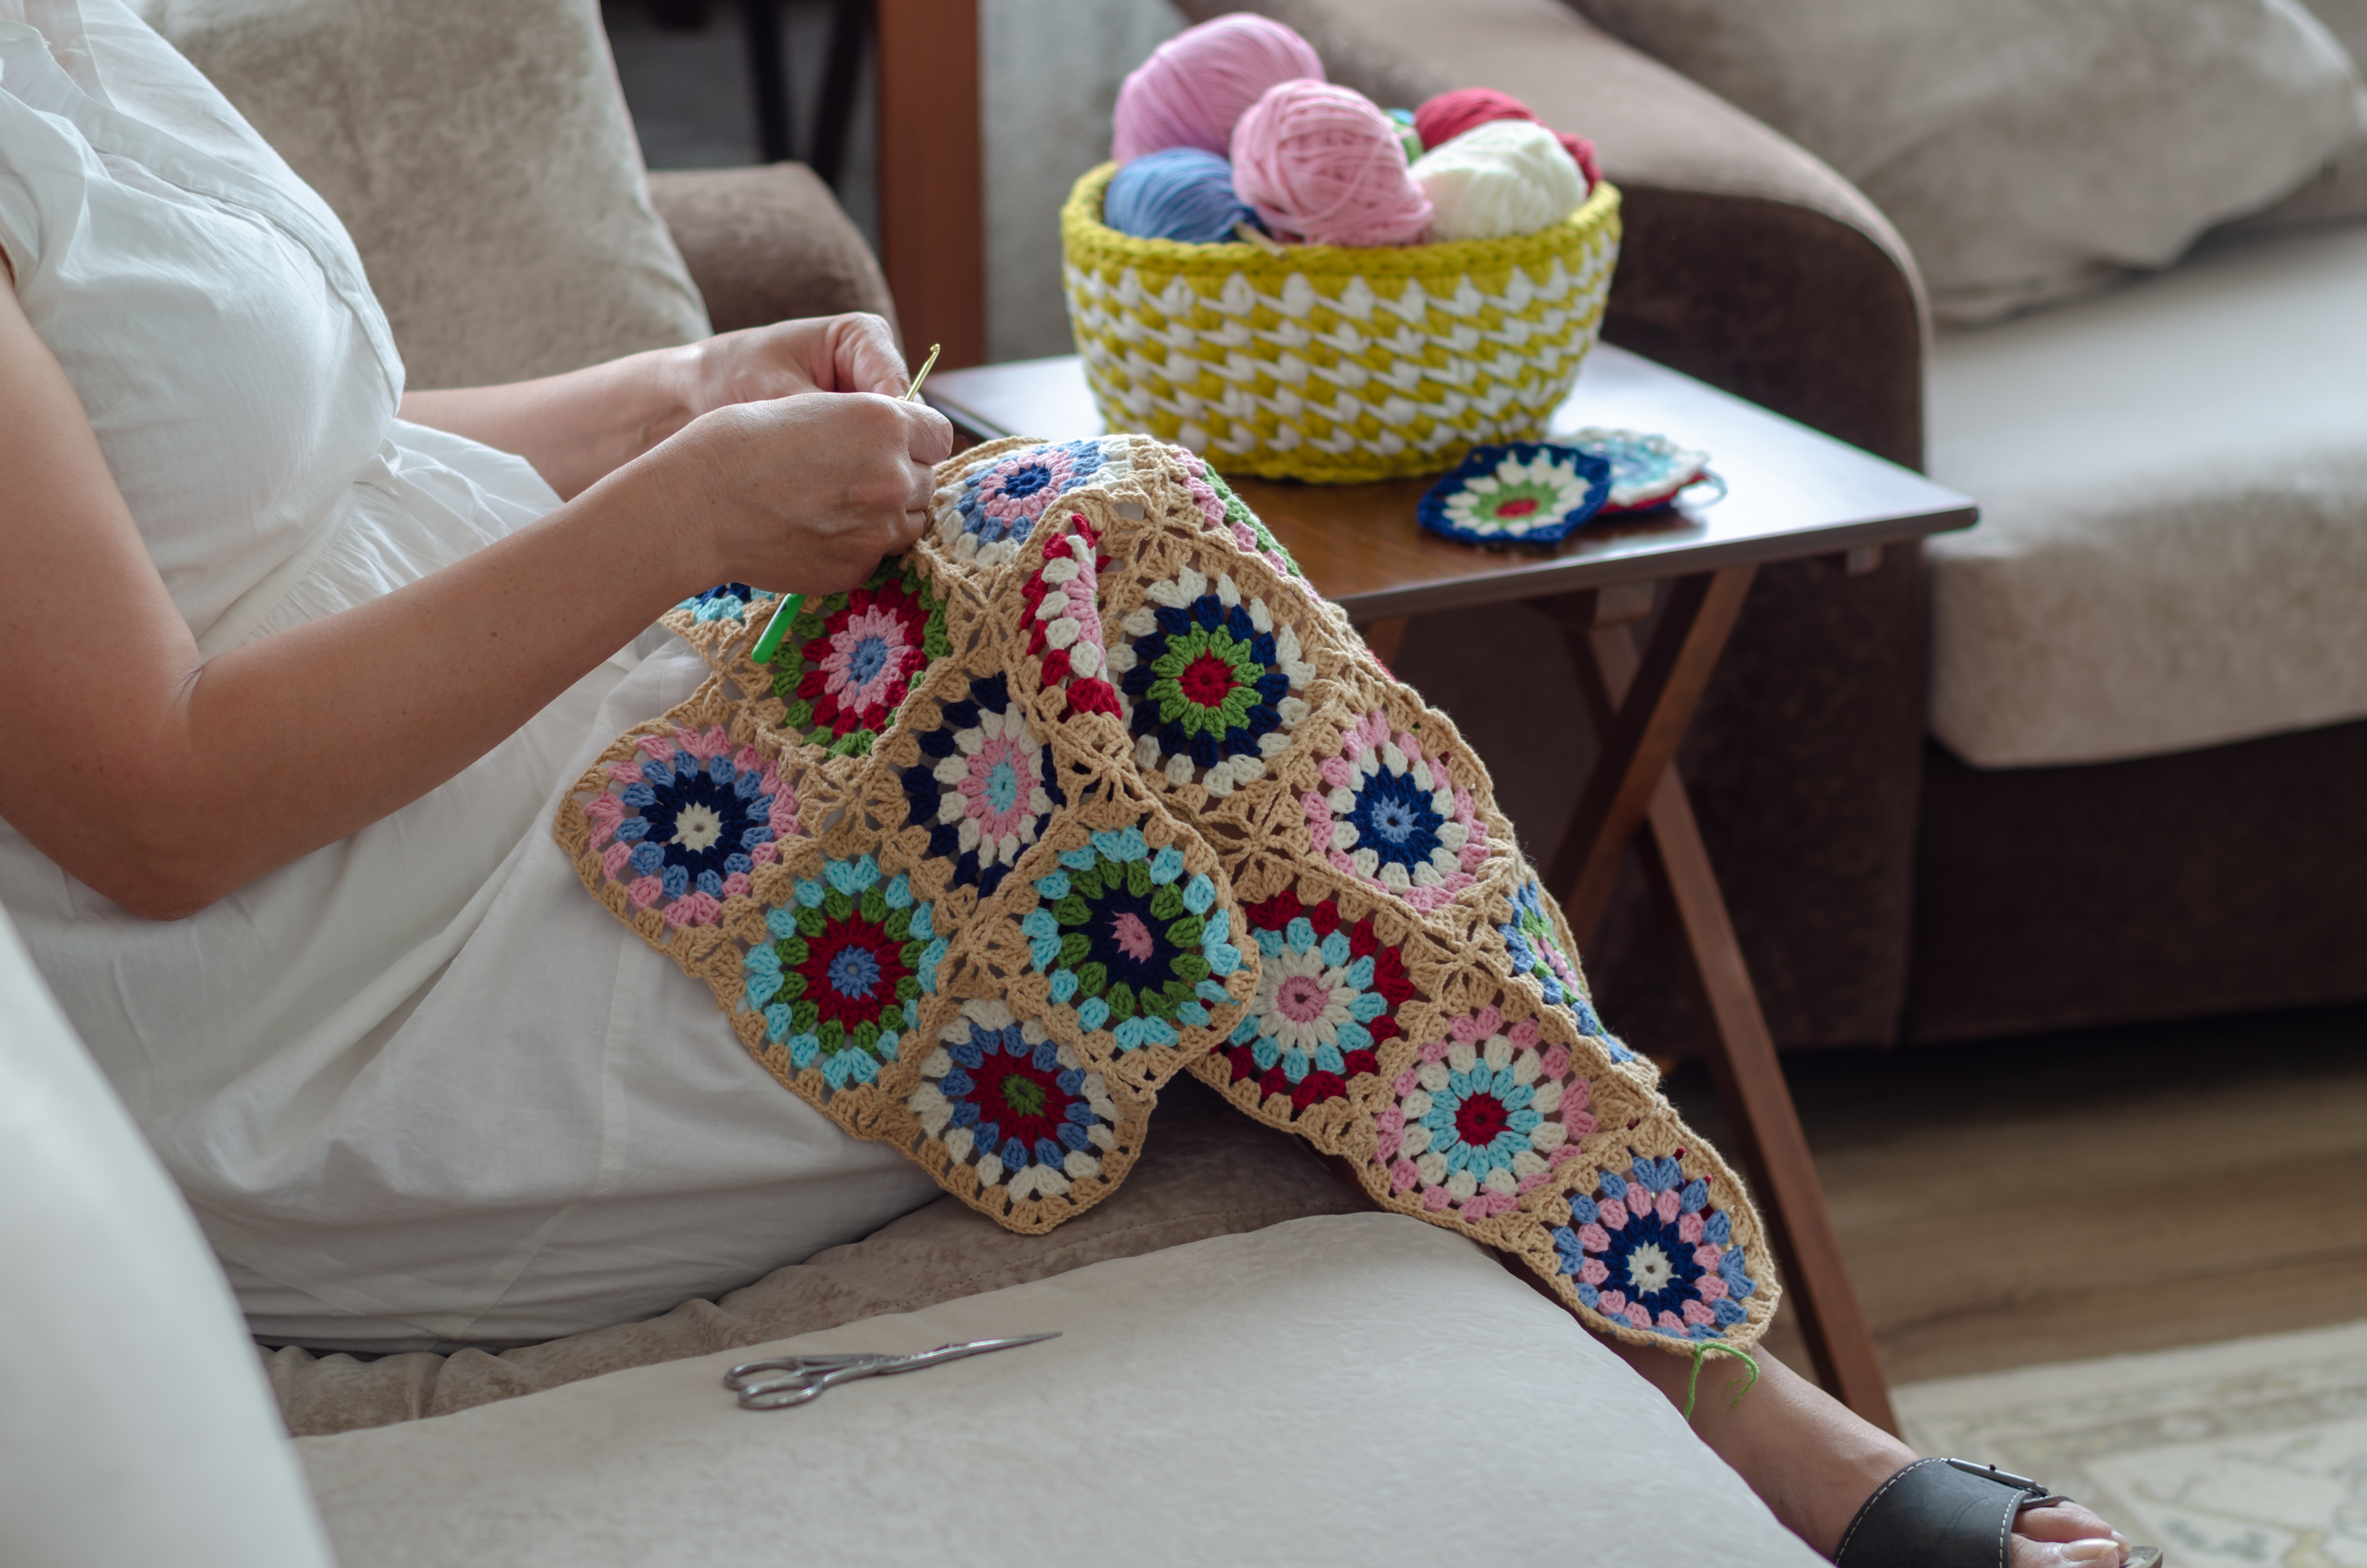 Woman crocheting a baby blanket | Source: Shutterstock